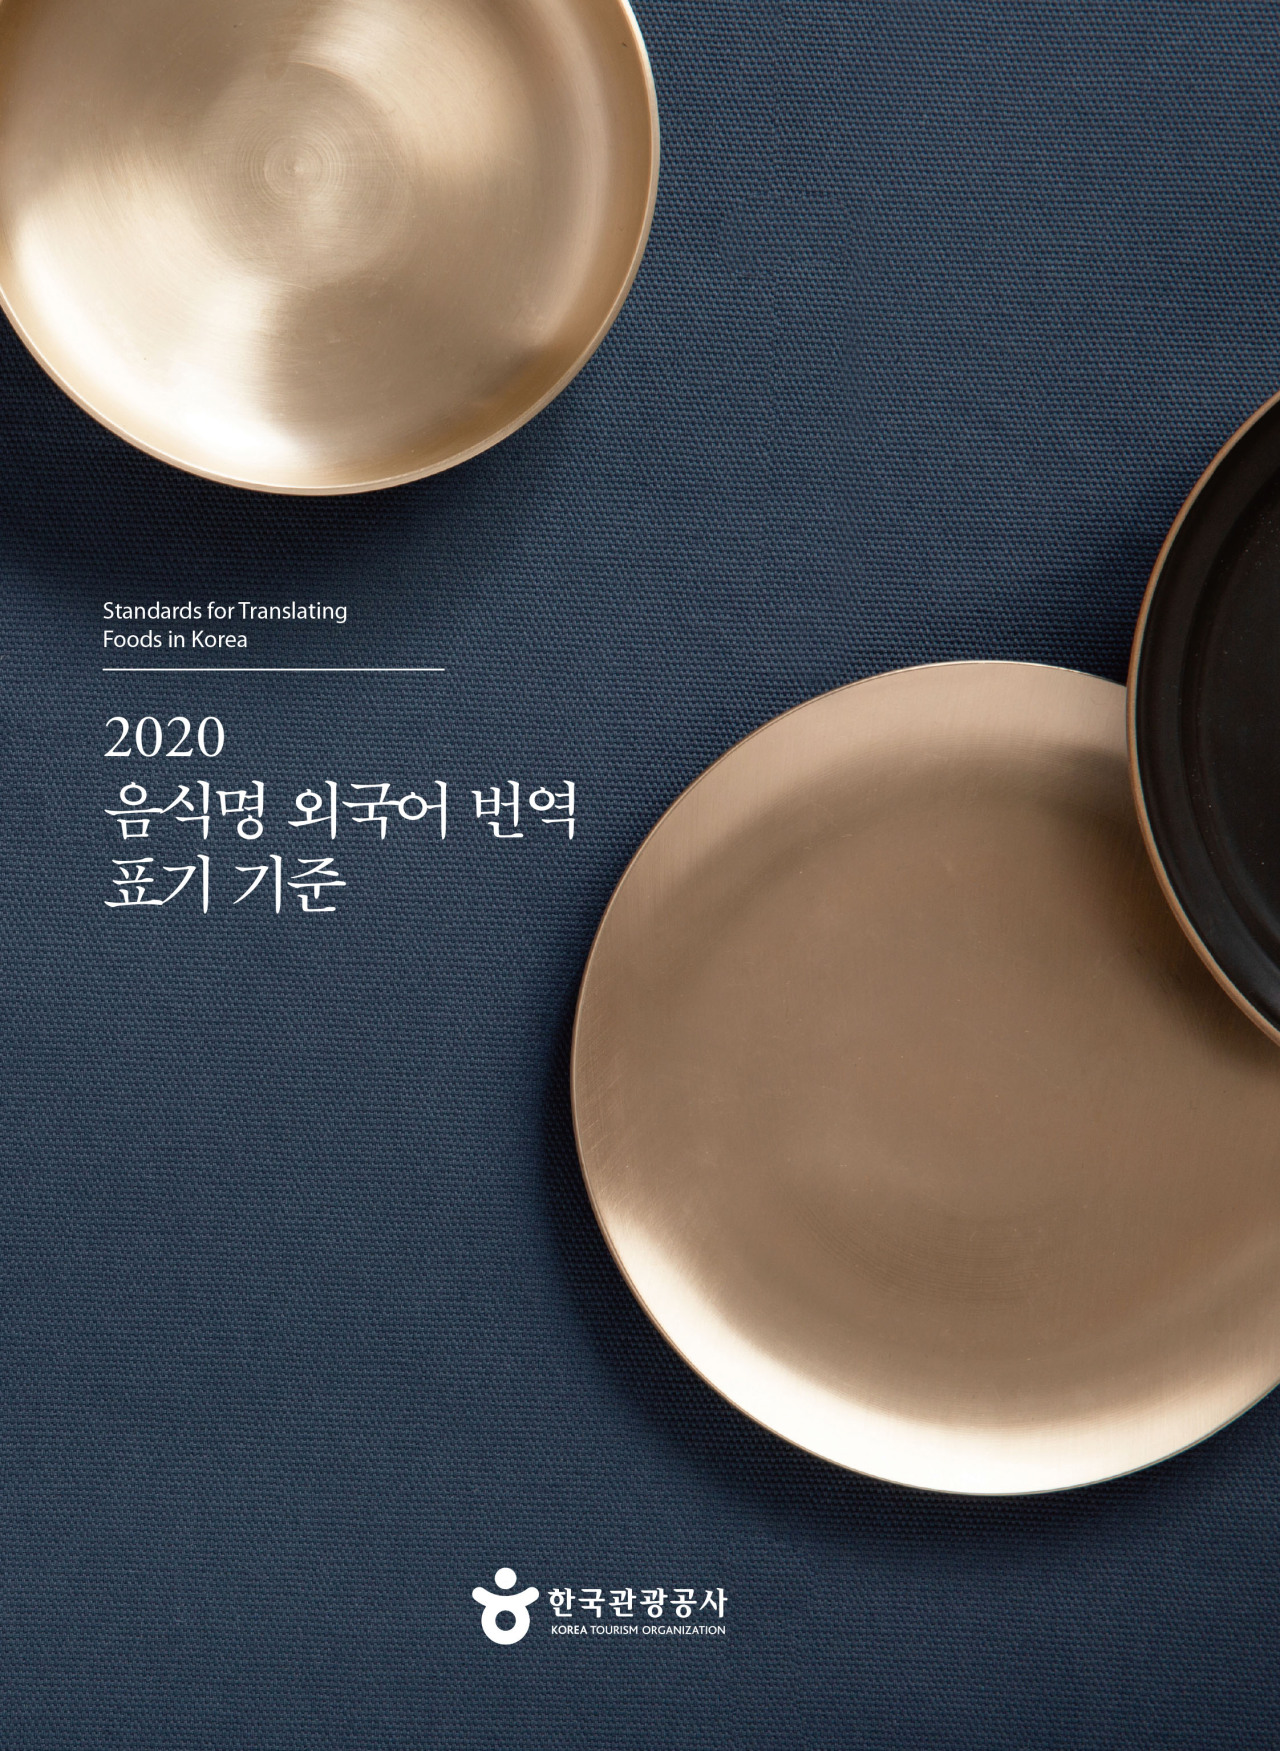 The cover of Korea Tourism Organization's Standards for Translating Foods in Korea (Korea Tourism Organization)